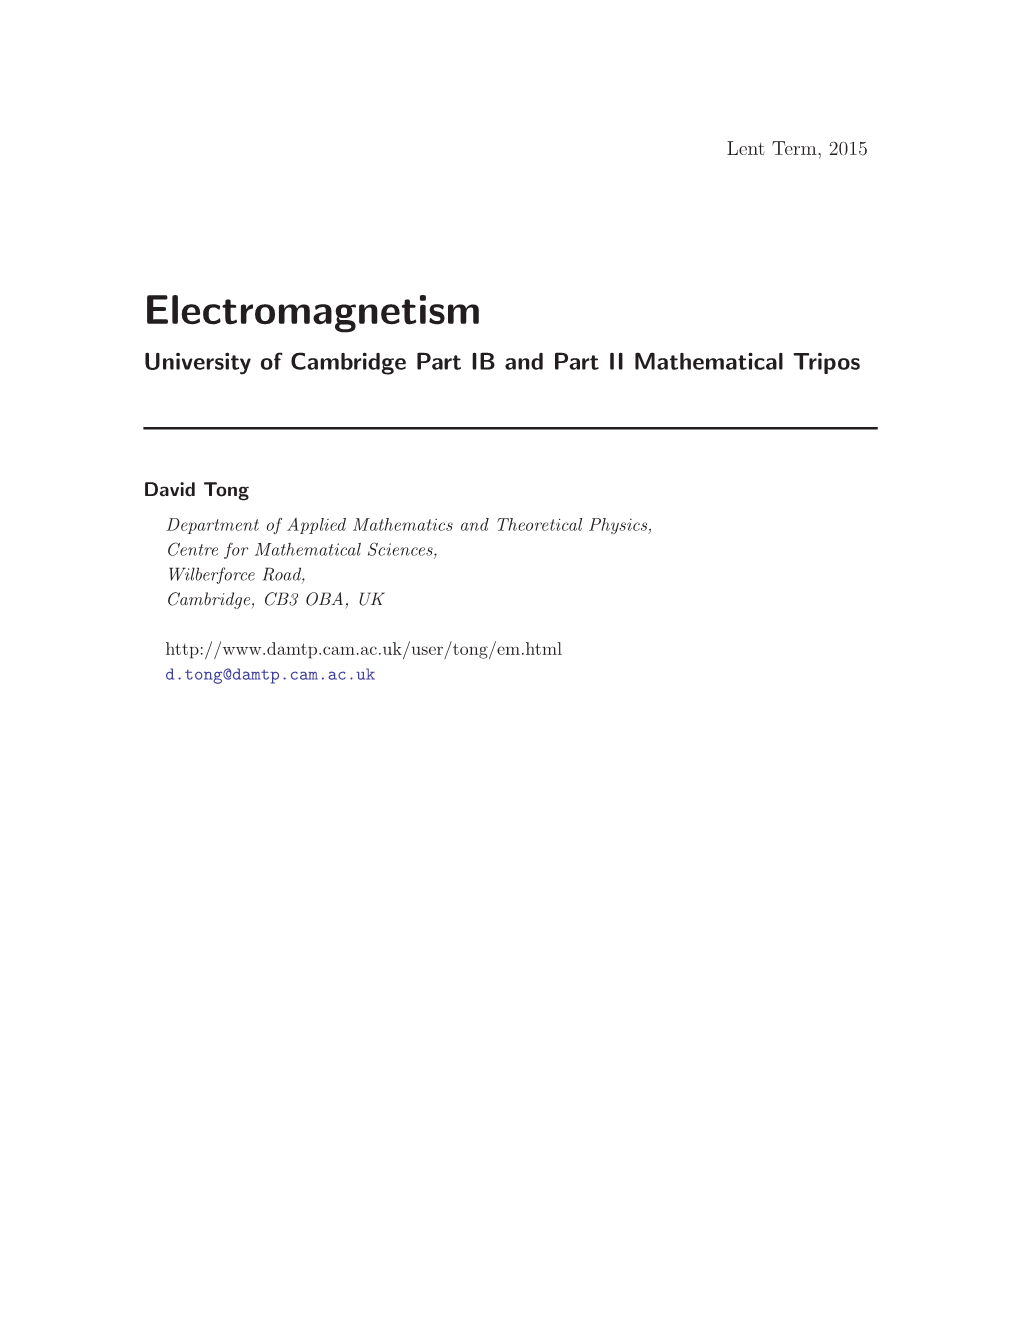 Electromagnetism University of Cambridge Part IB and Part II Mathematical Tripos